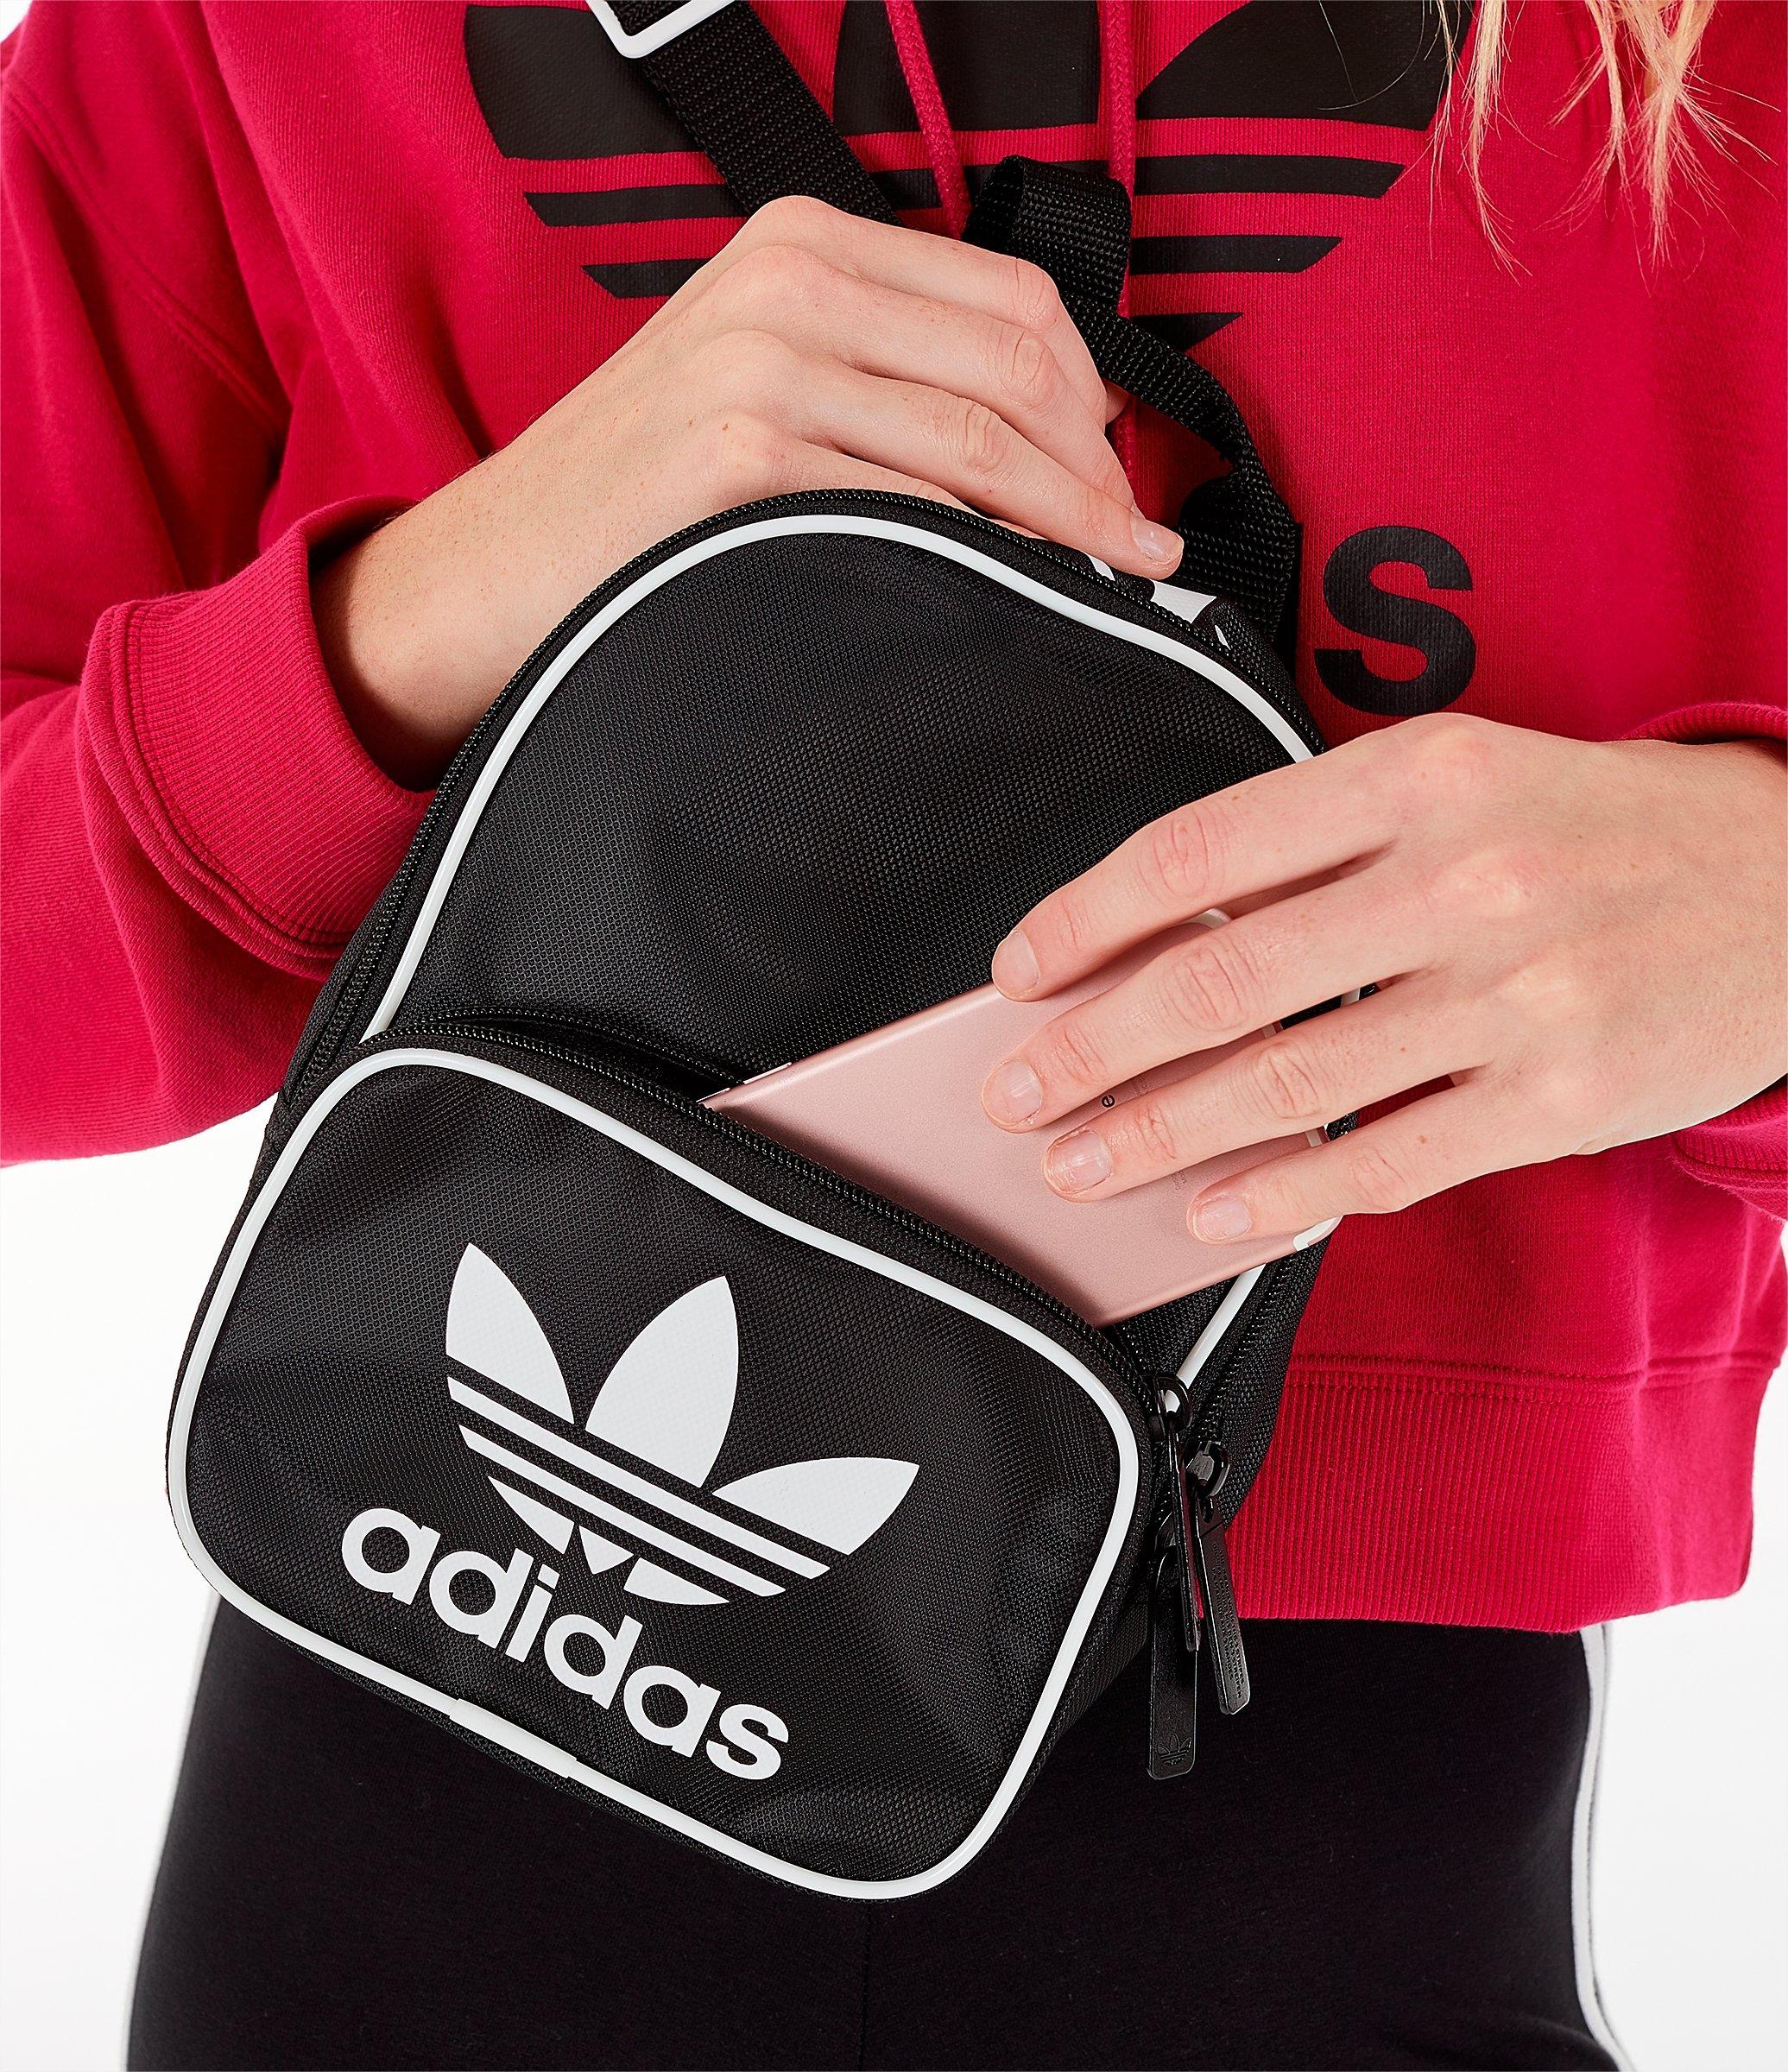 adidas originals women's santiago mini backpack